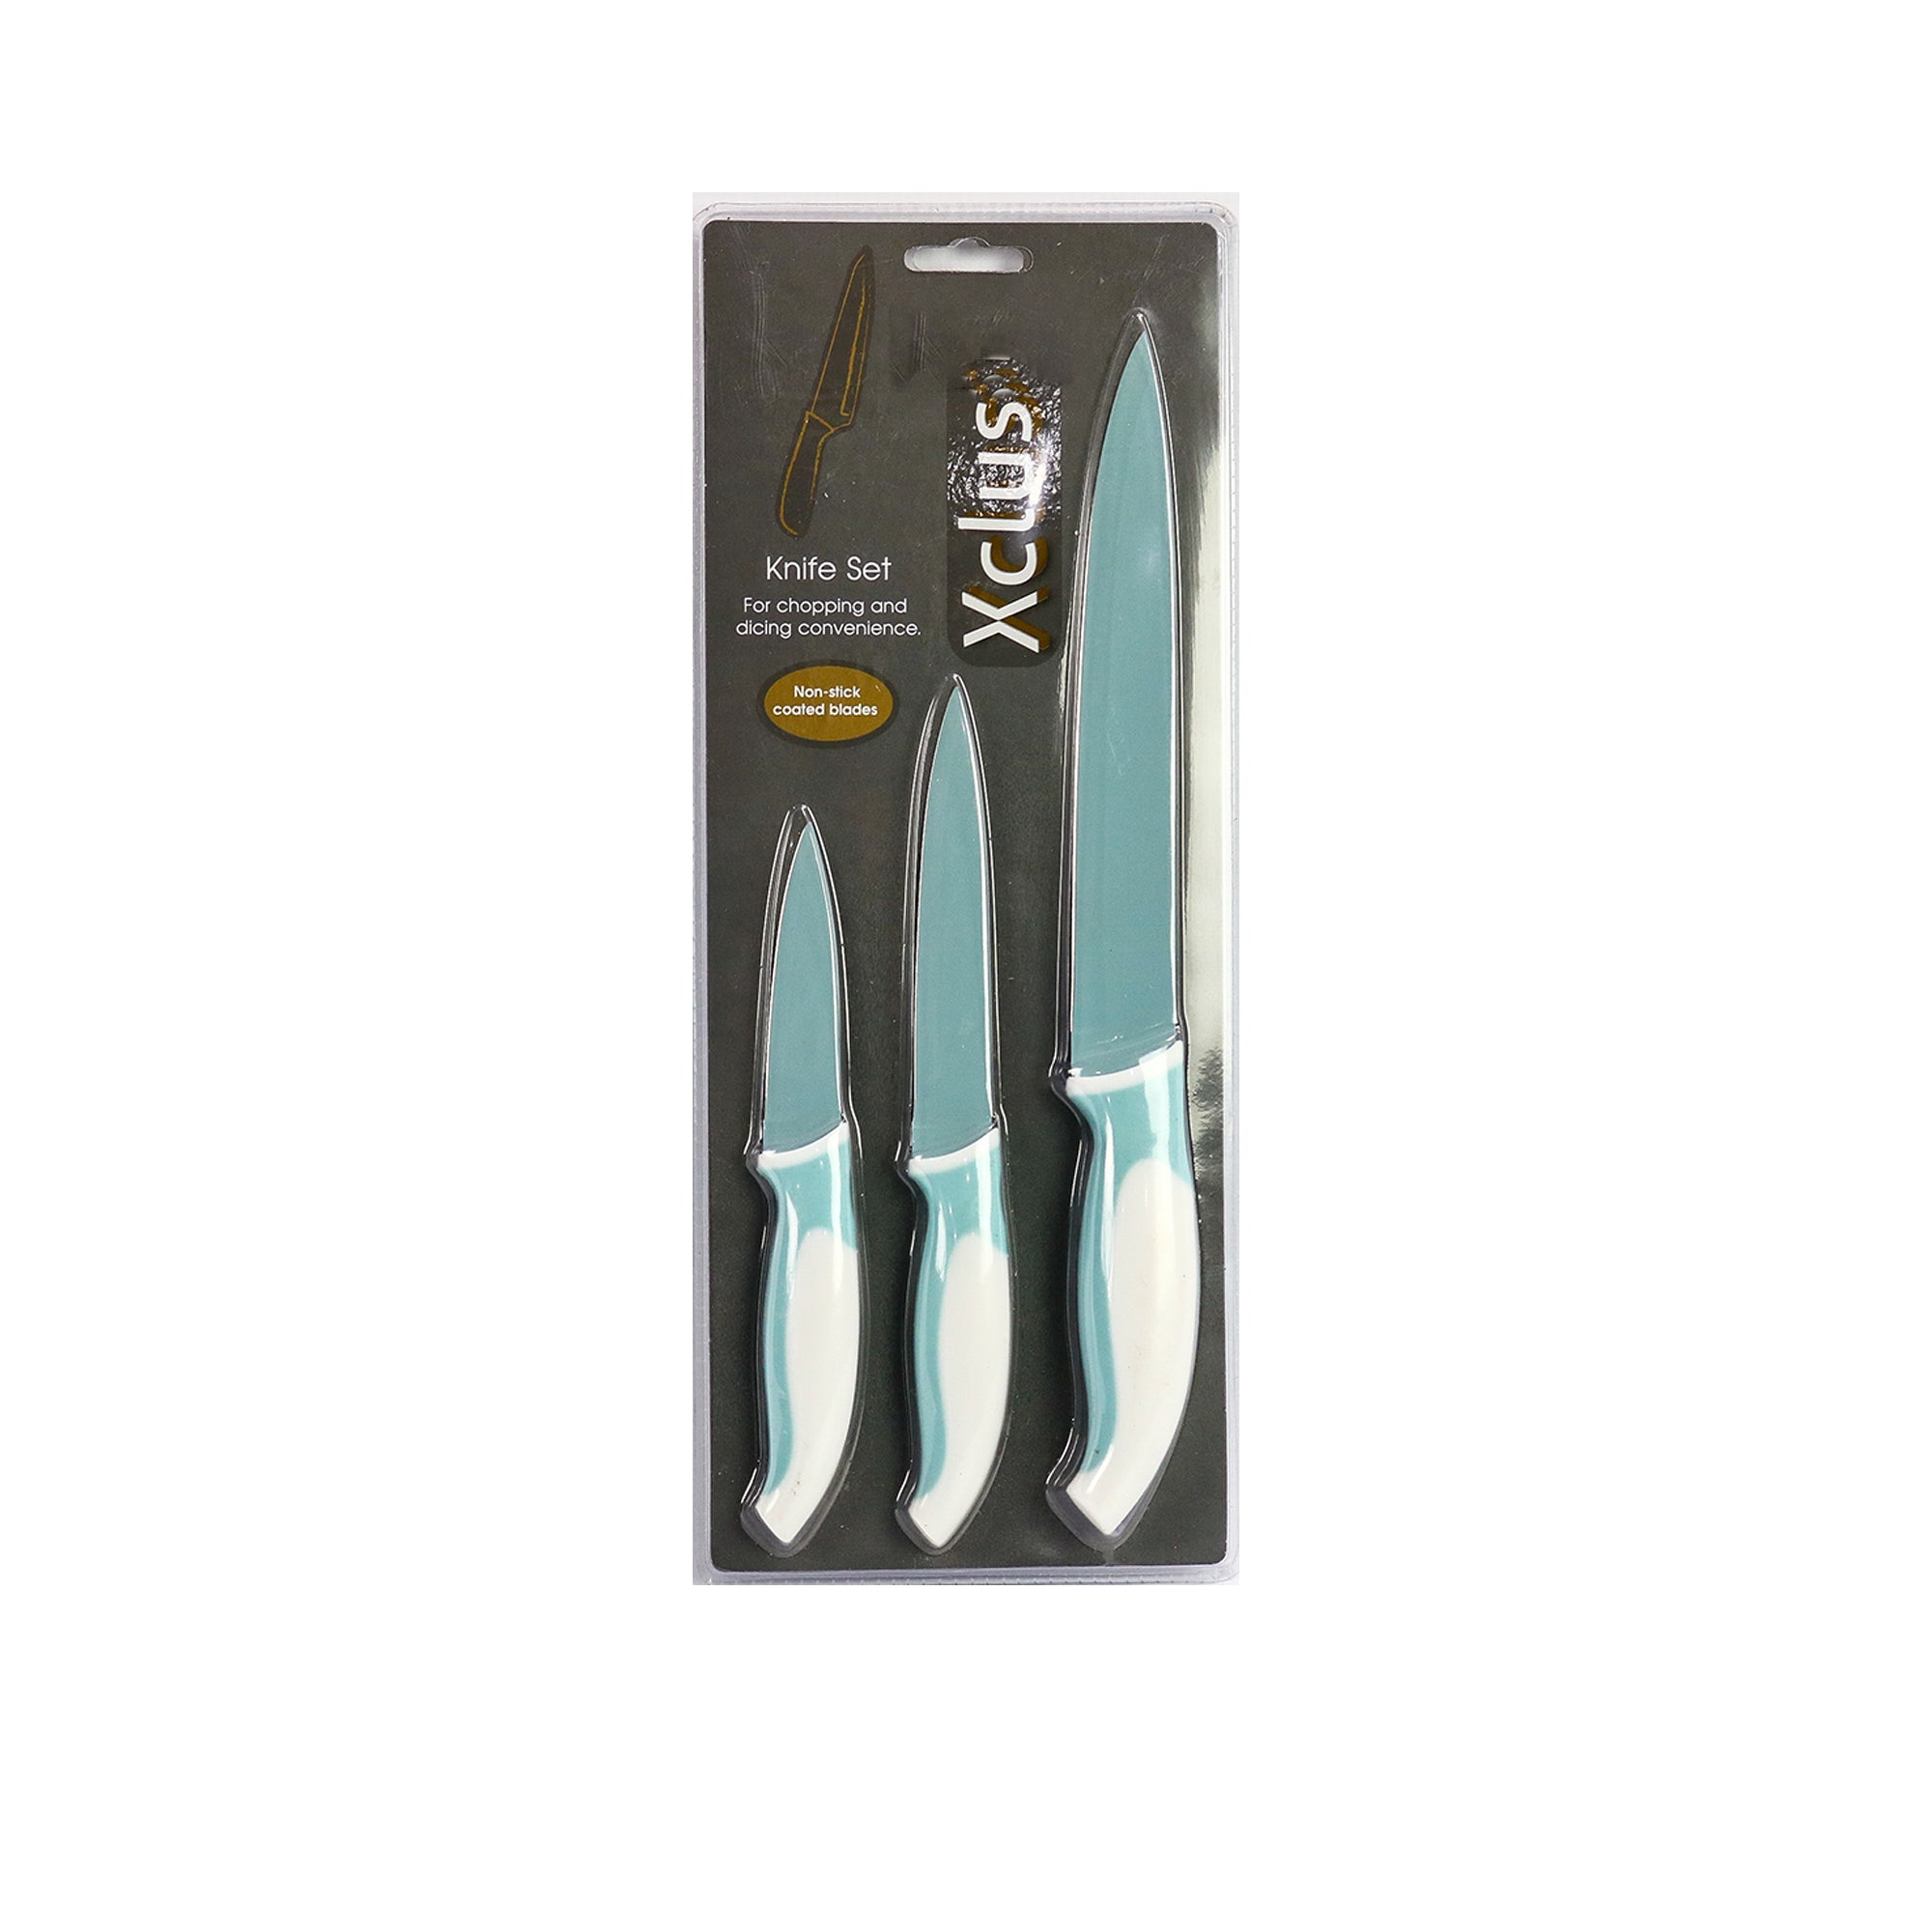 Knife Set 3 Pack Coated Blade 2 Tone